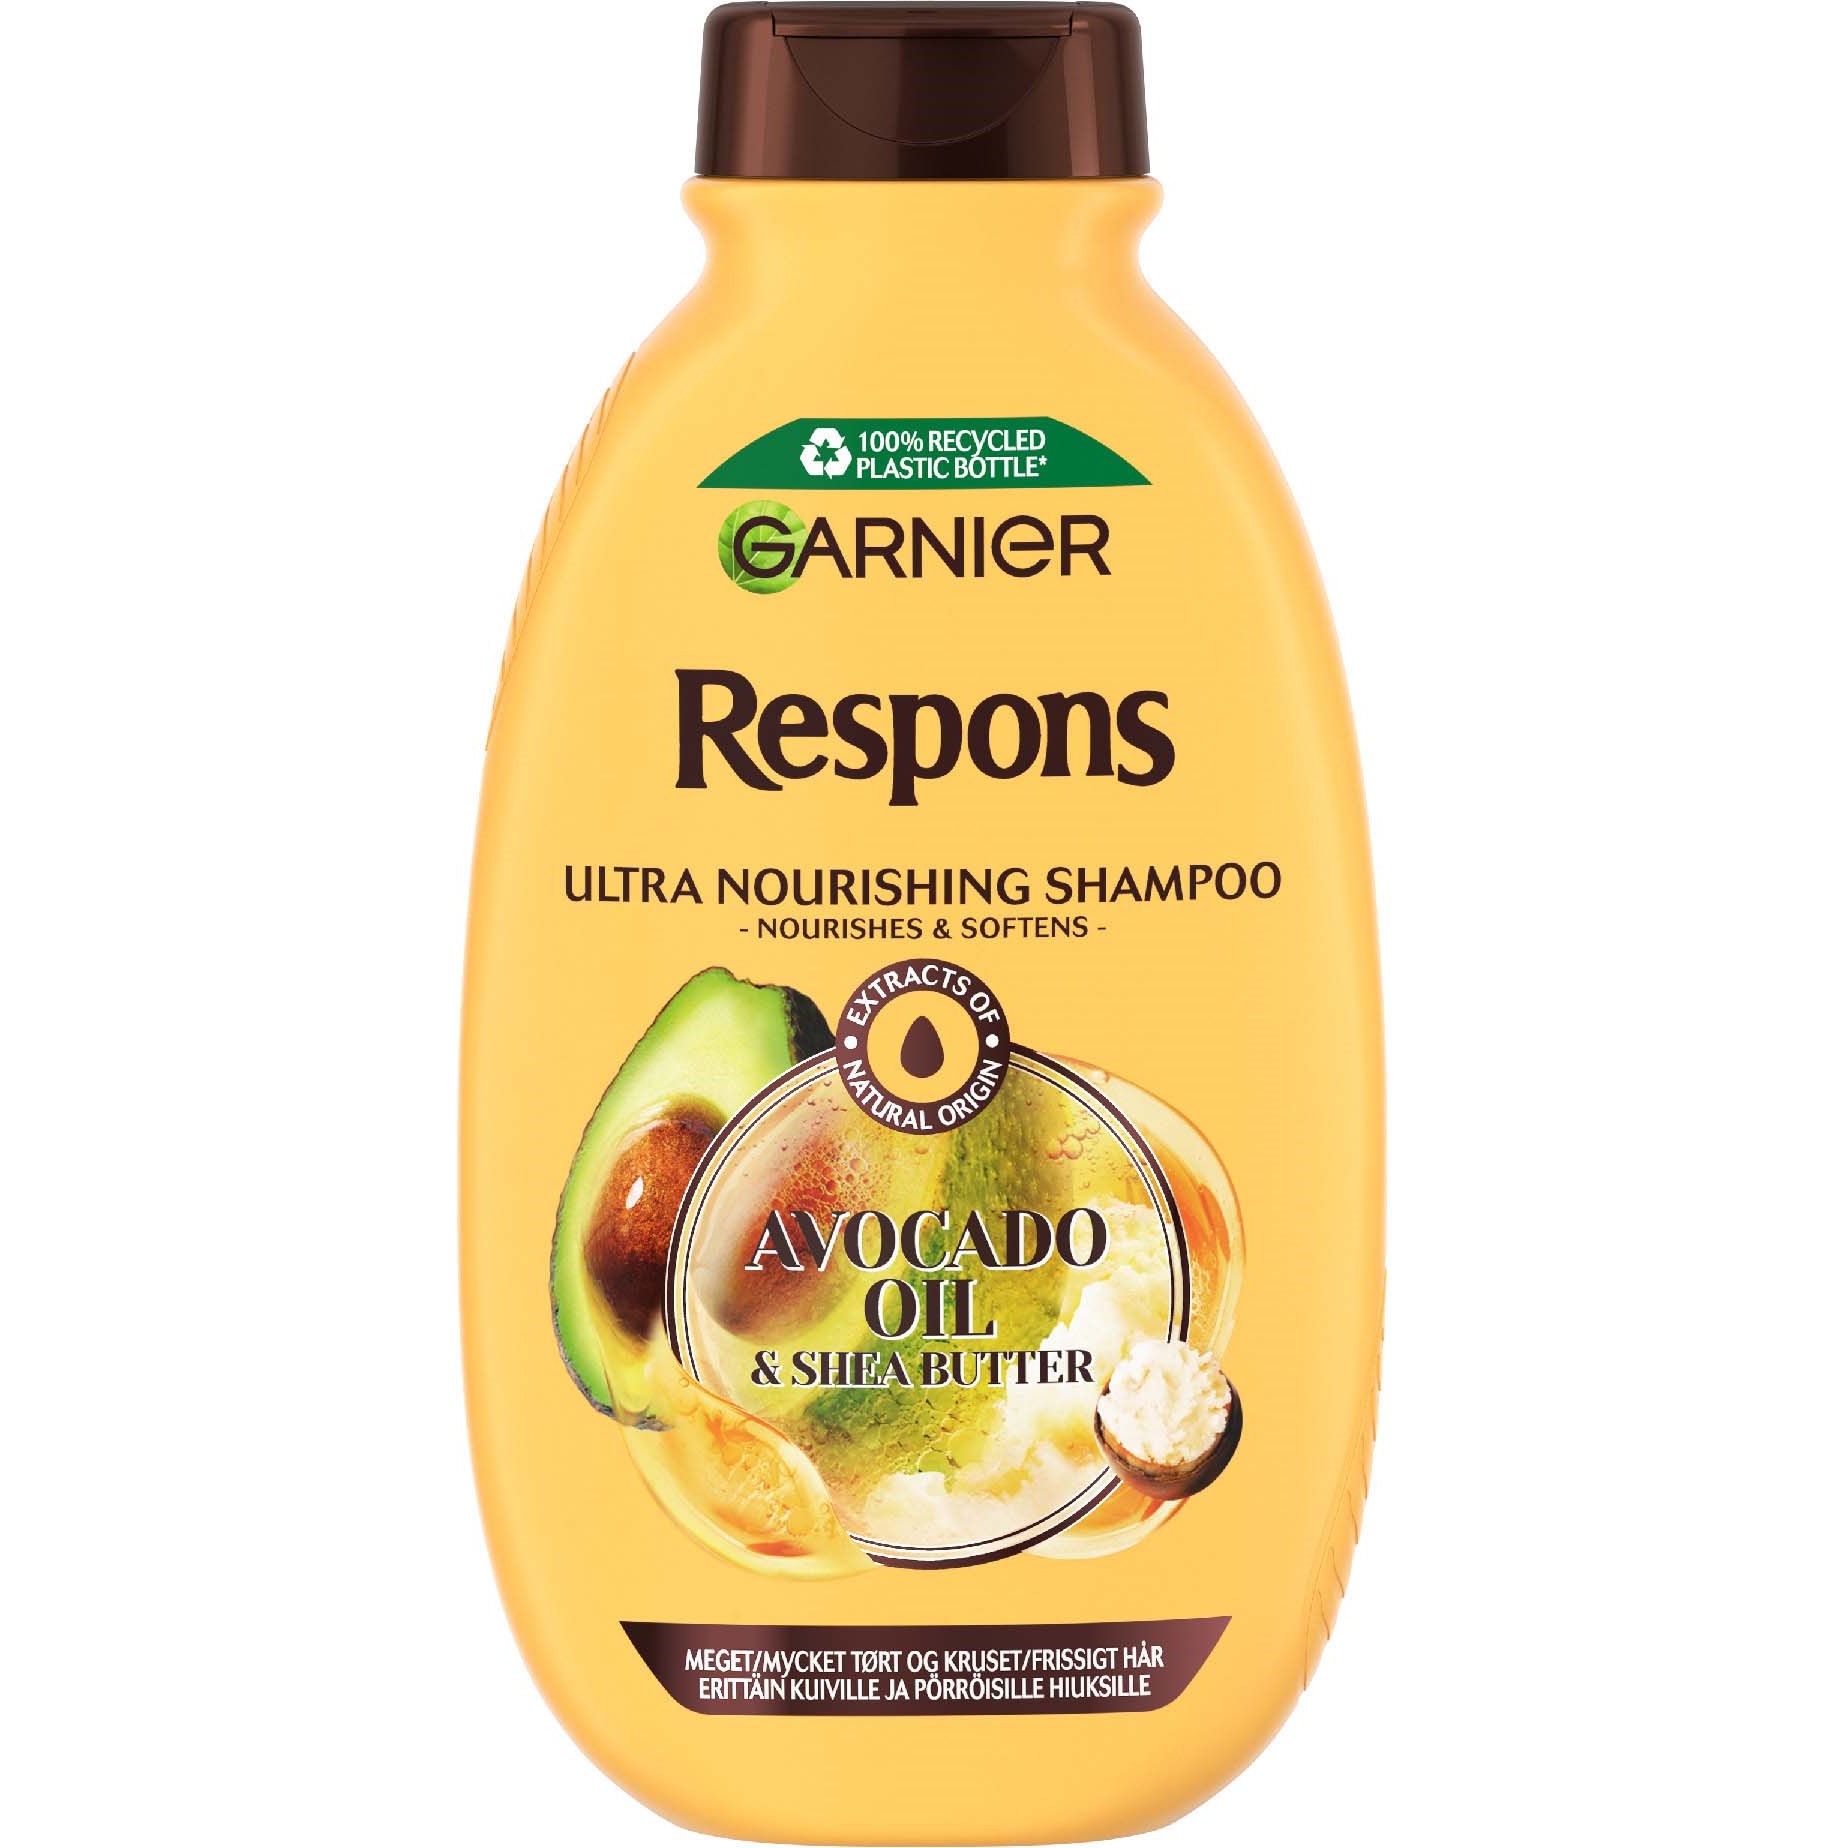 Garnier Respons Avocado Oil & Shea Butter Shampoo